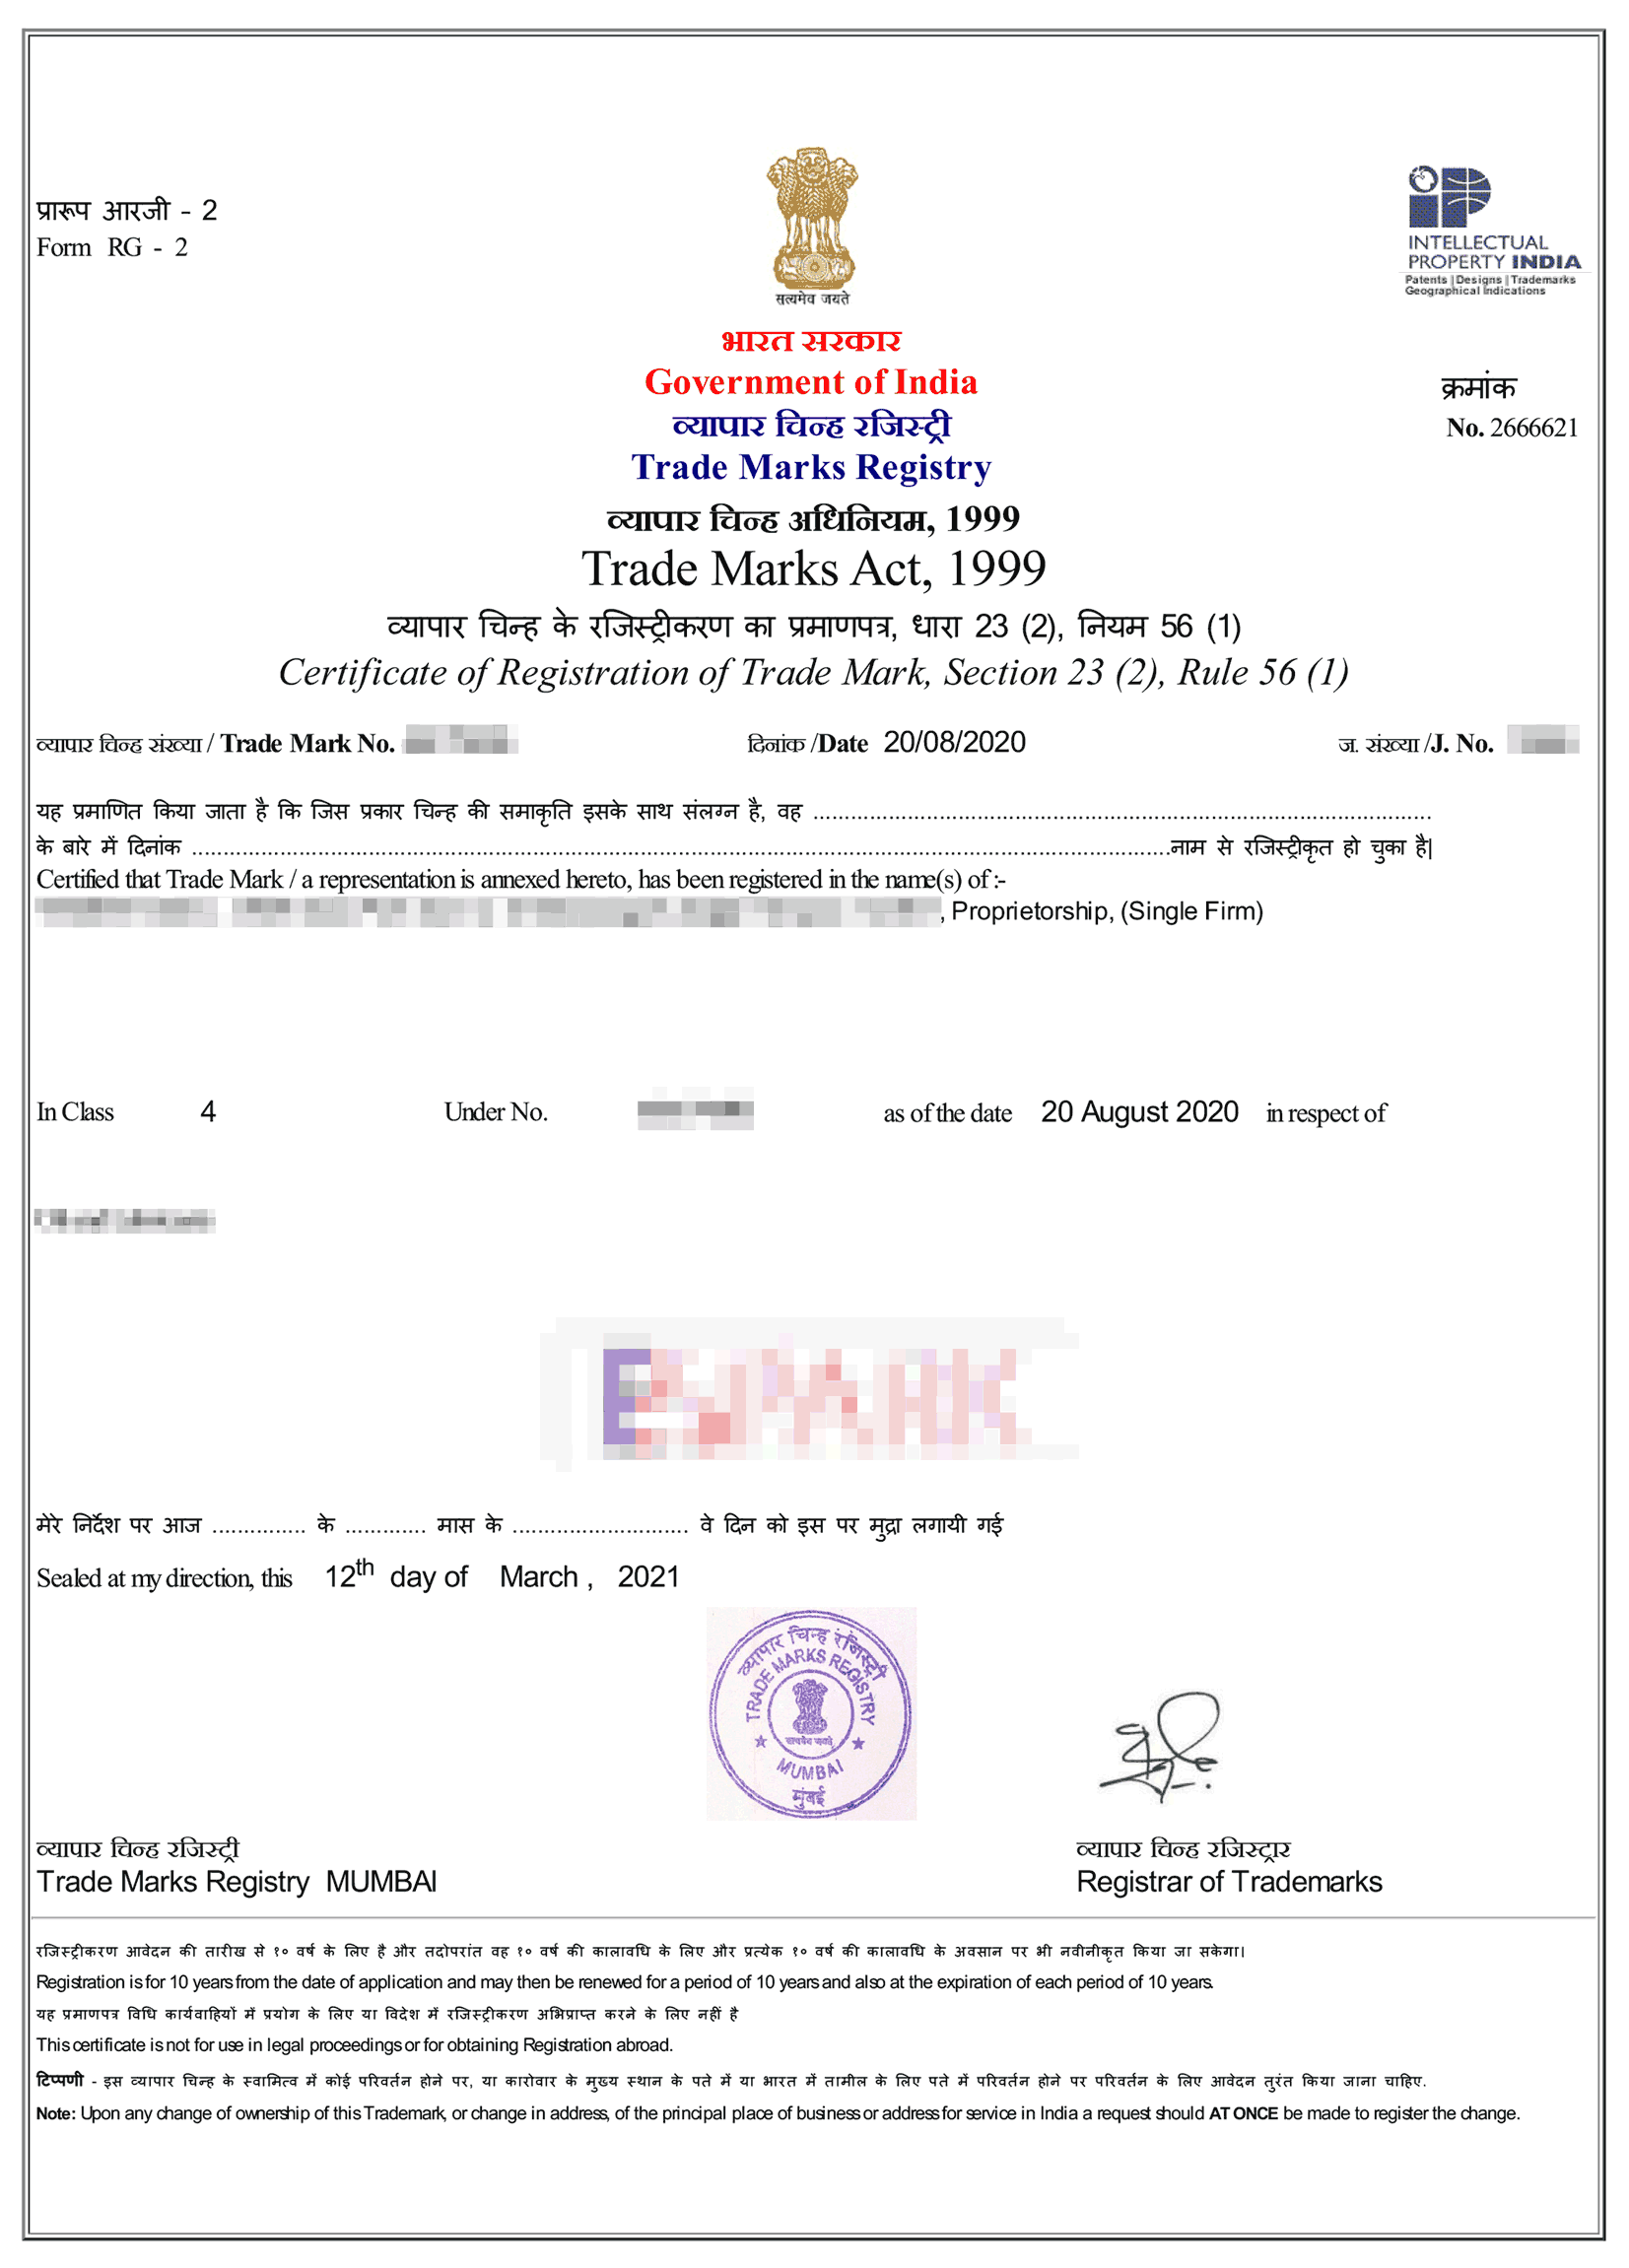 TM-Devicemark-Sample Certificate